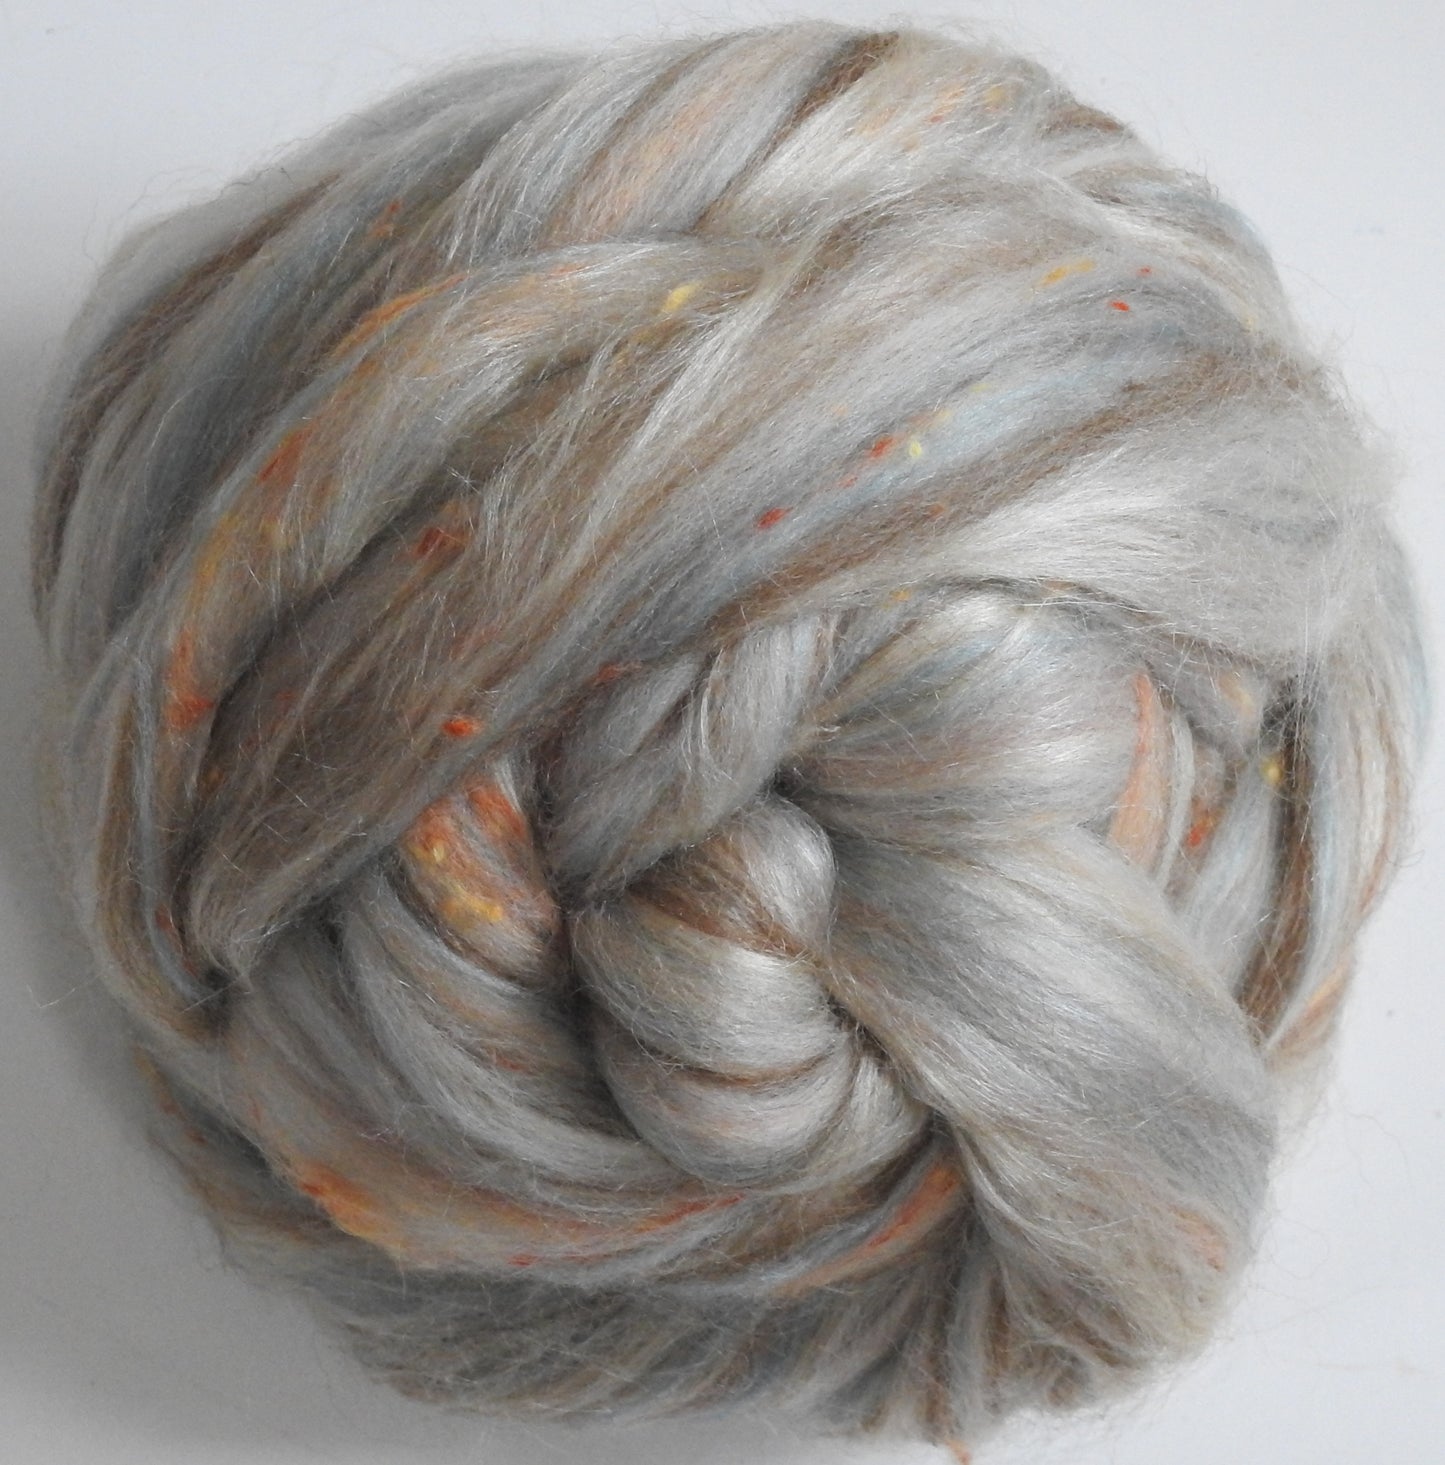 Caracal - Custom Blended Top- Merino/ Shetland/ Tussah Silk/ Baby Camel /Tweed Blend (25/25/25/15/10)